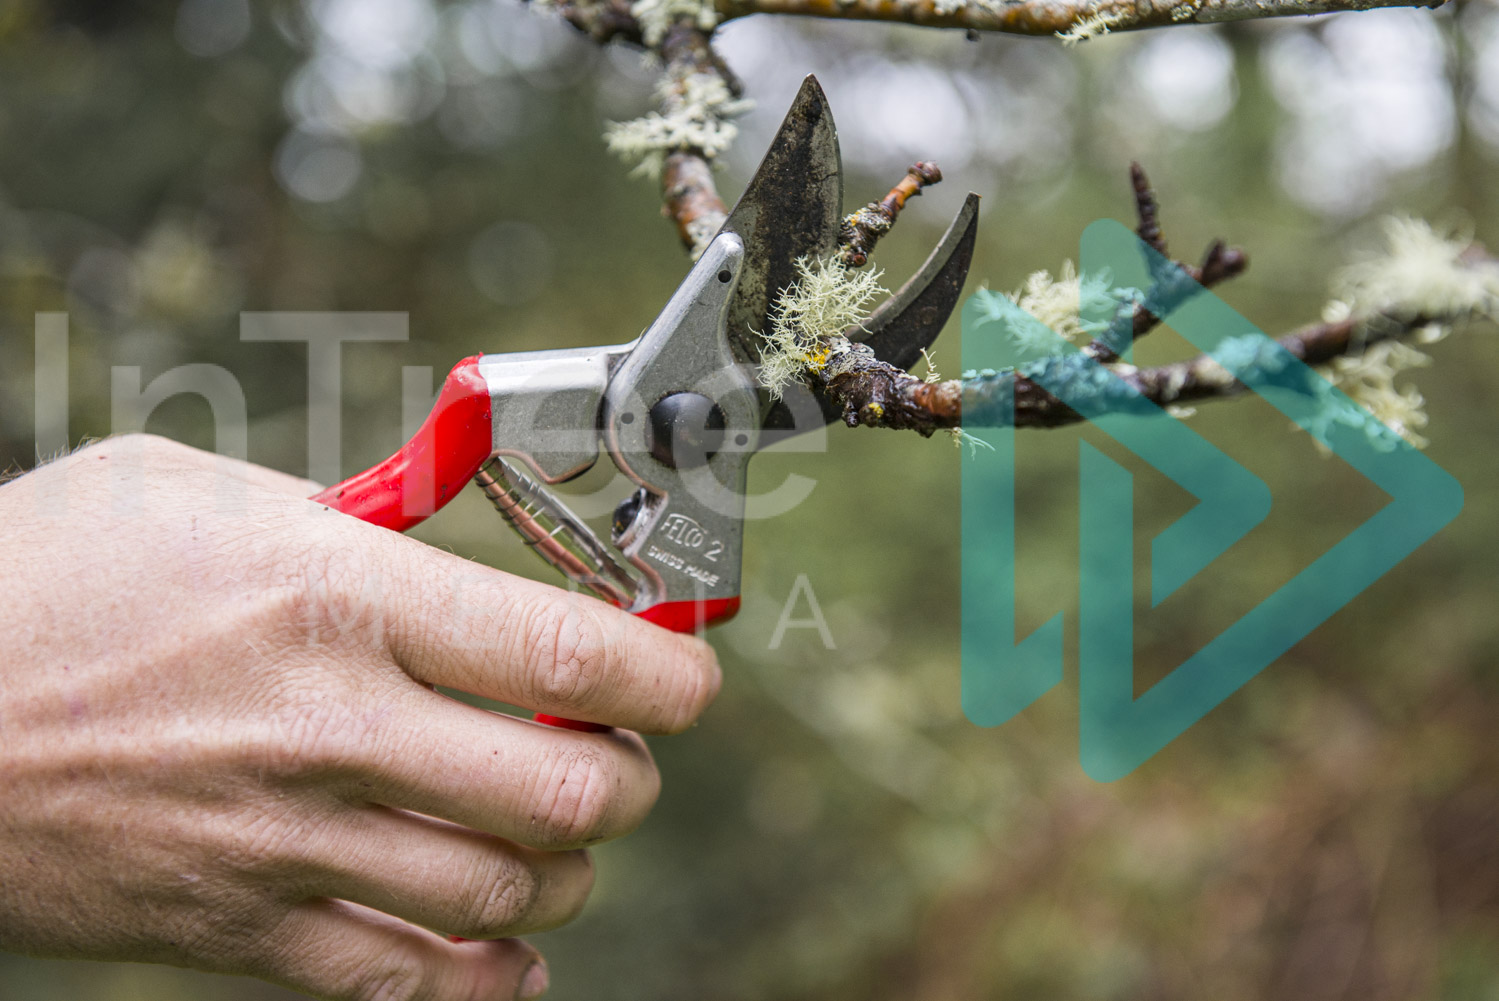 Hand pruners being used to prune fruit tree InTree arborist image 001-21-5651